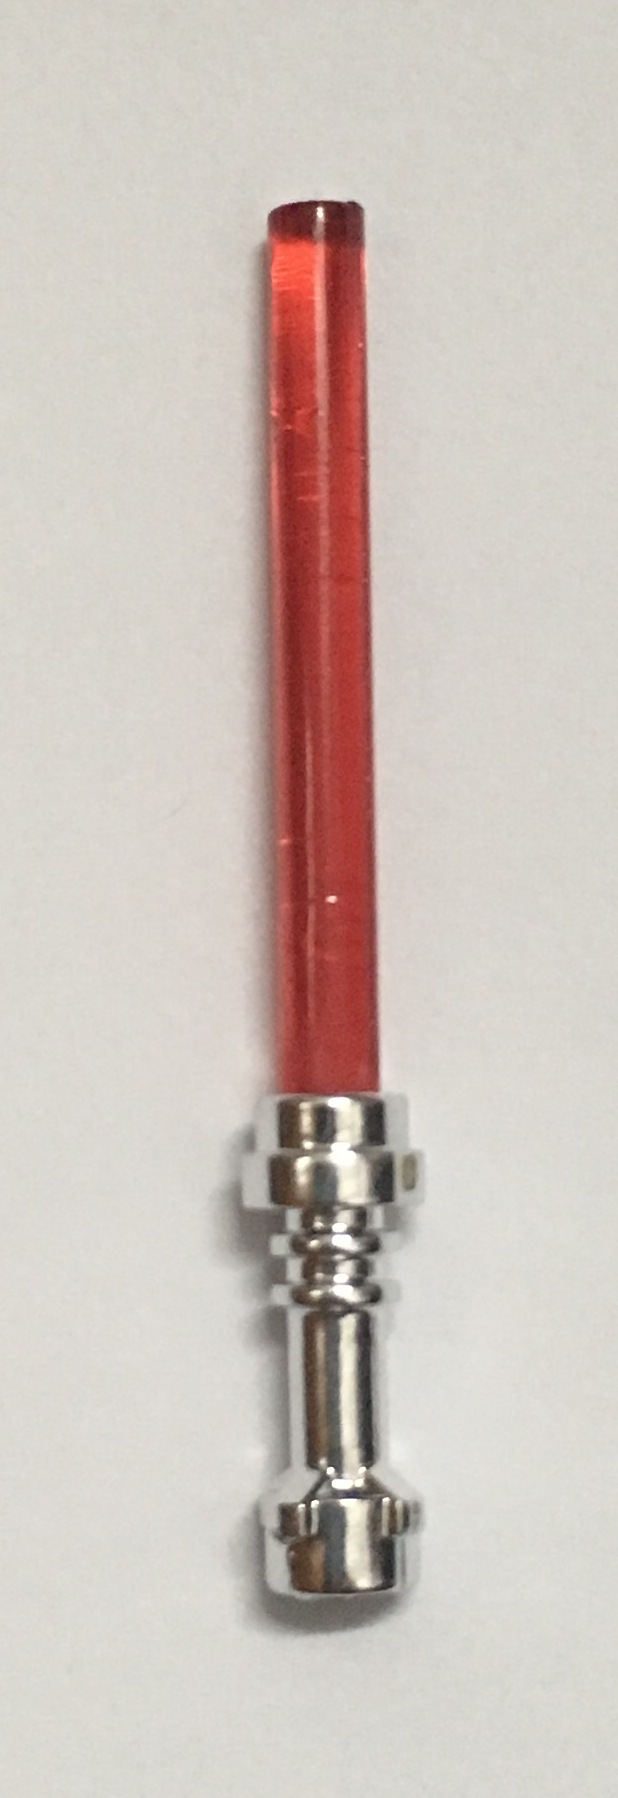 Red Lightsaber w/ Chrome Hilt Lego Star Wars Minifig Silver Weapon Original 